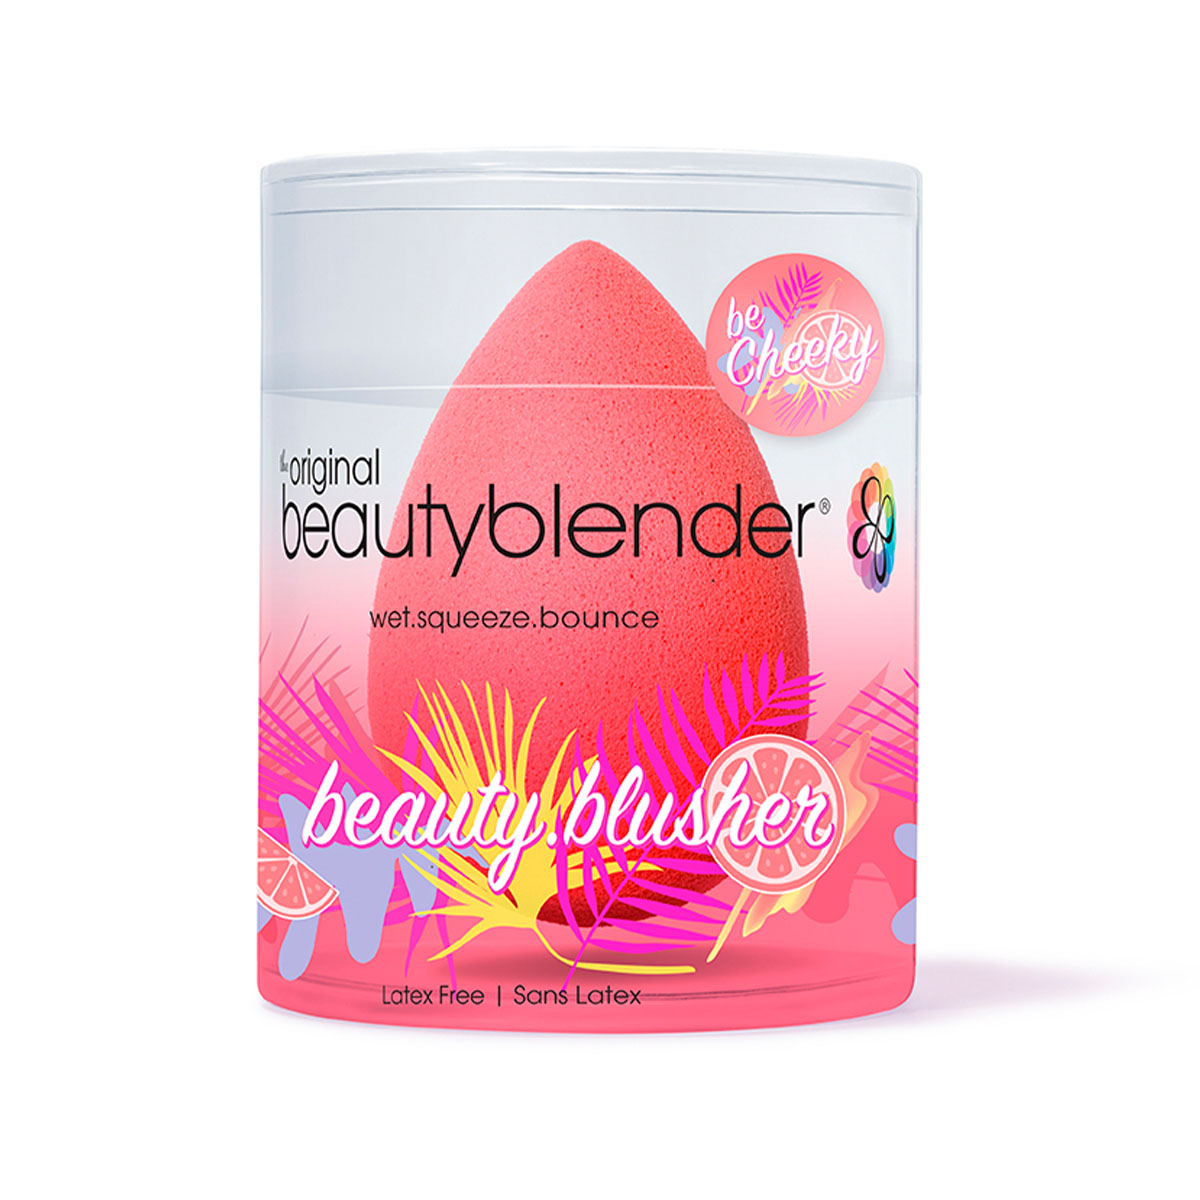 beautyblender beauty.blusher cheeky - интернет-магазин профессиональной косметики Spadream, изображение 40714